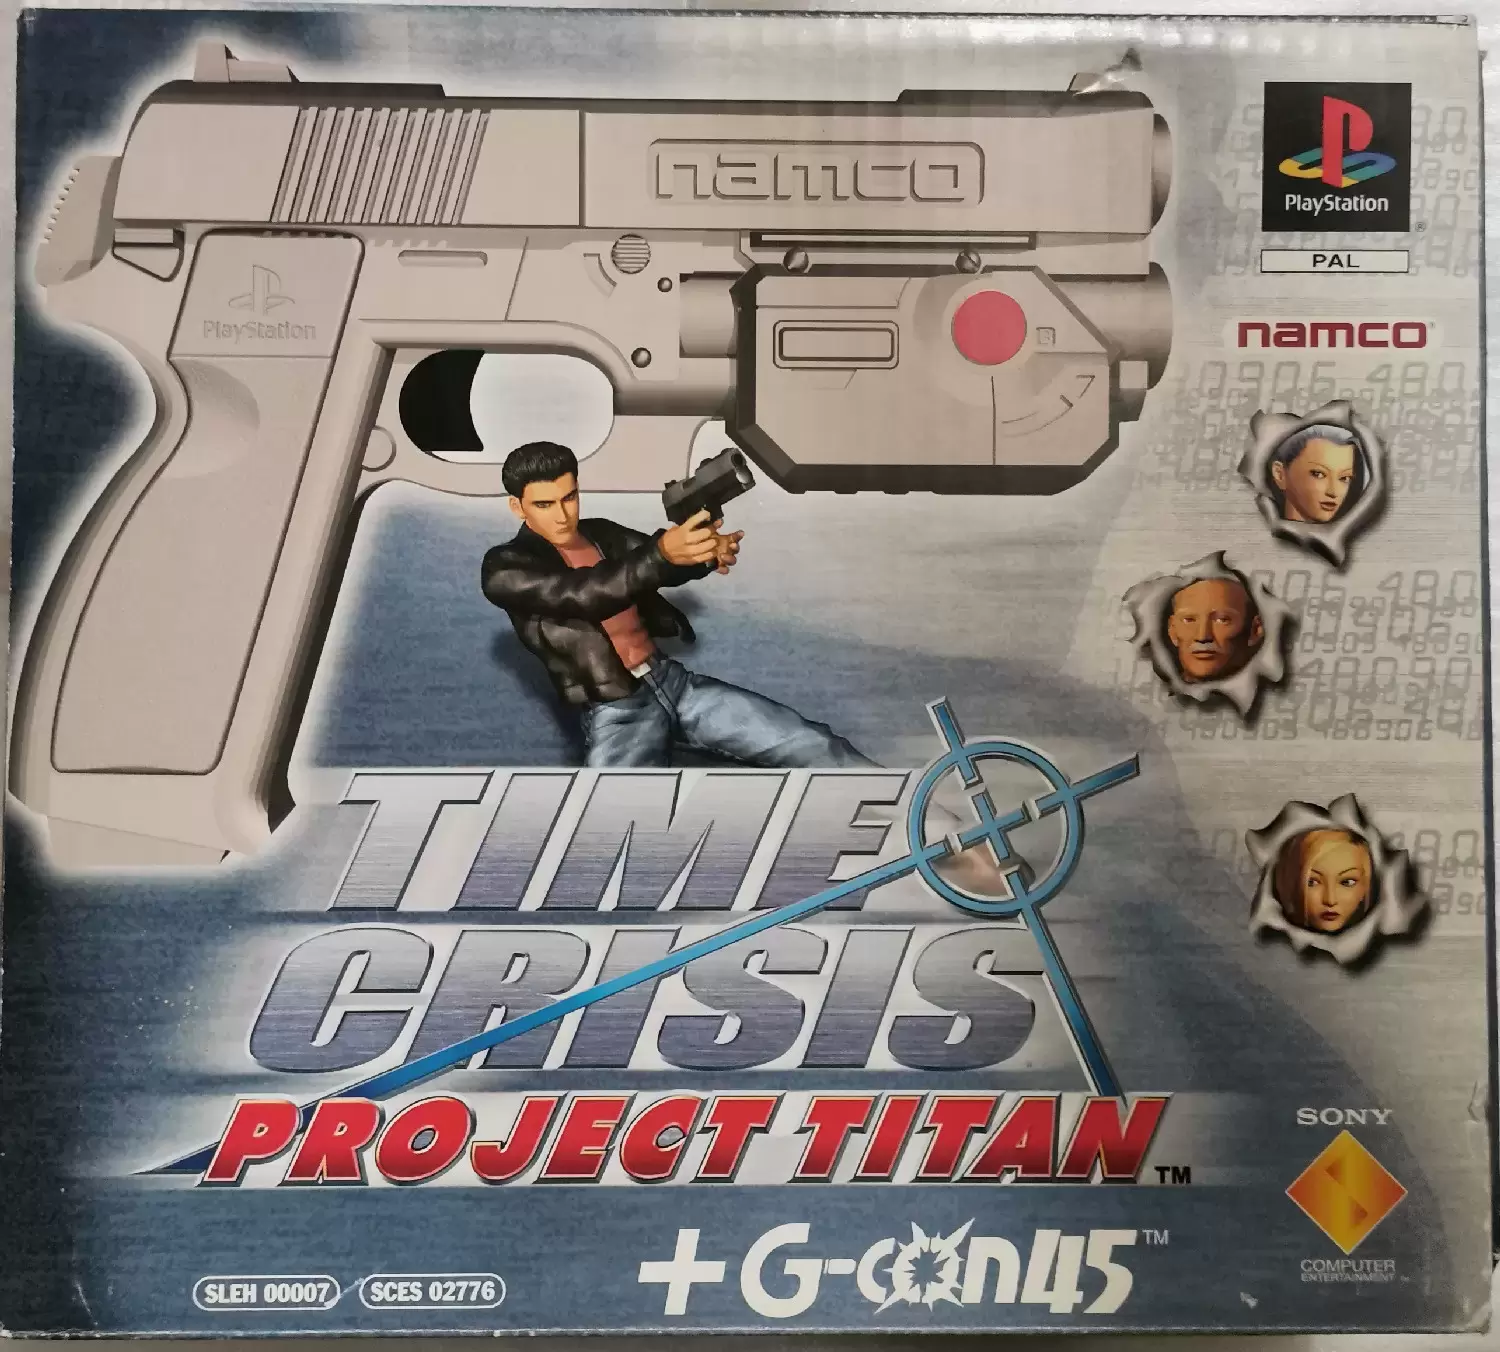 Jeux Playstation PS1 - Time crisis project titan + G-con 45